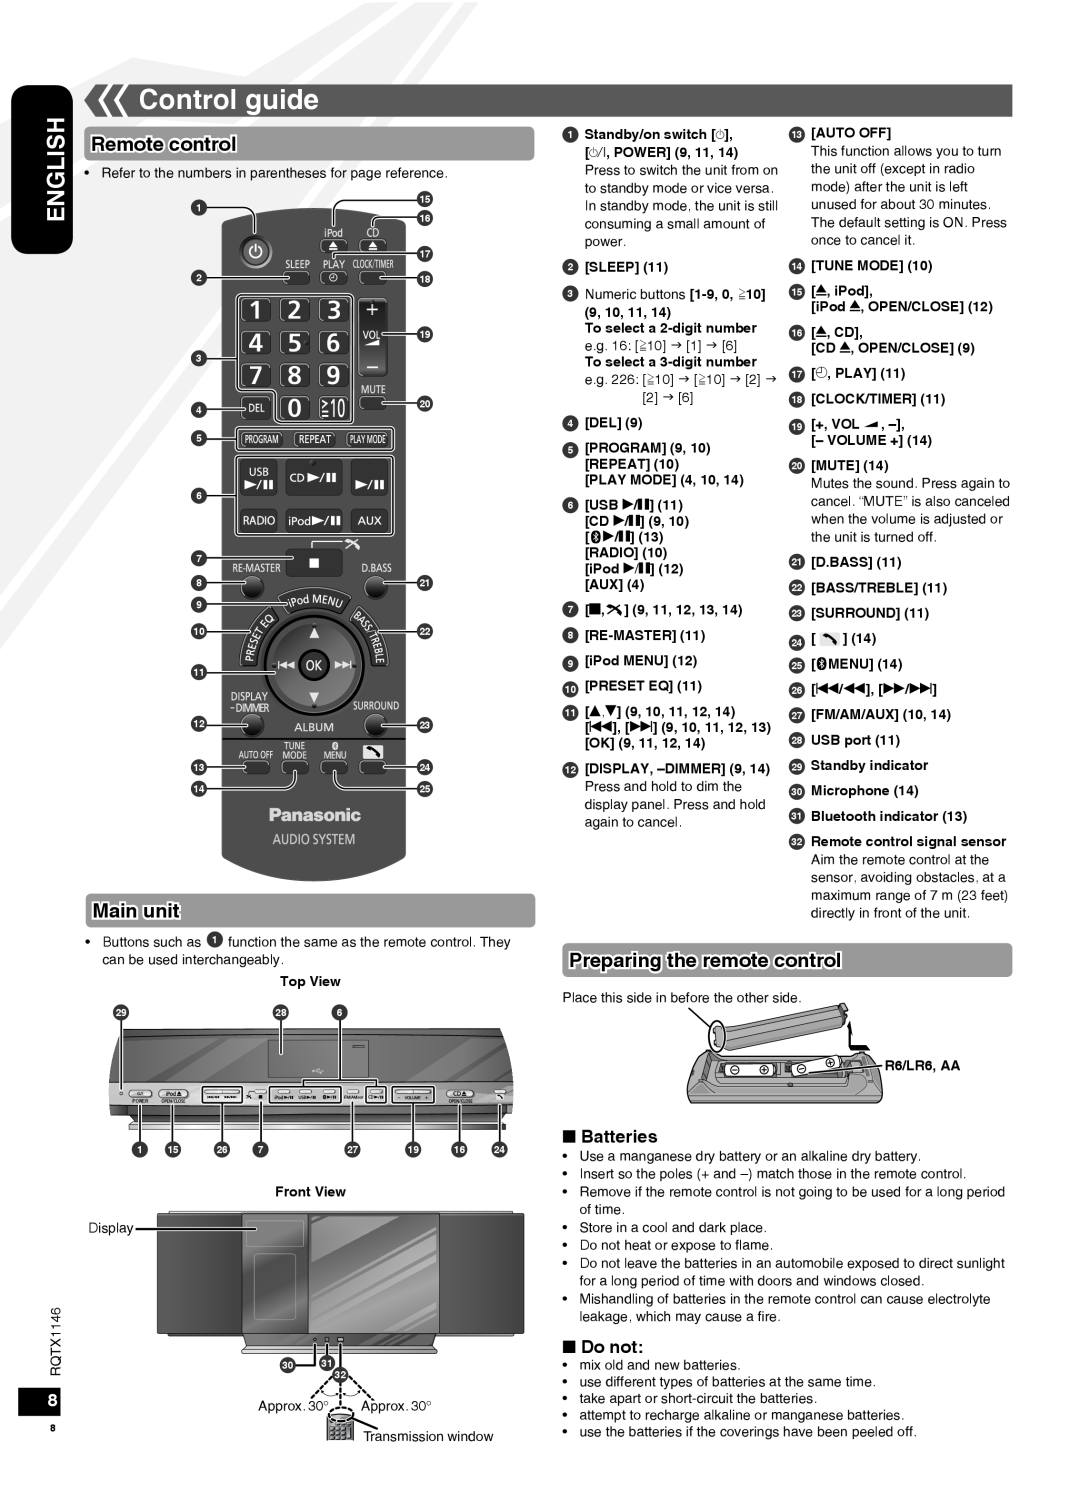 Panasonic SC-HC40 Control guide, Remote control, Main unit, Preparing the remote control, Batteries, Do not, English 